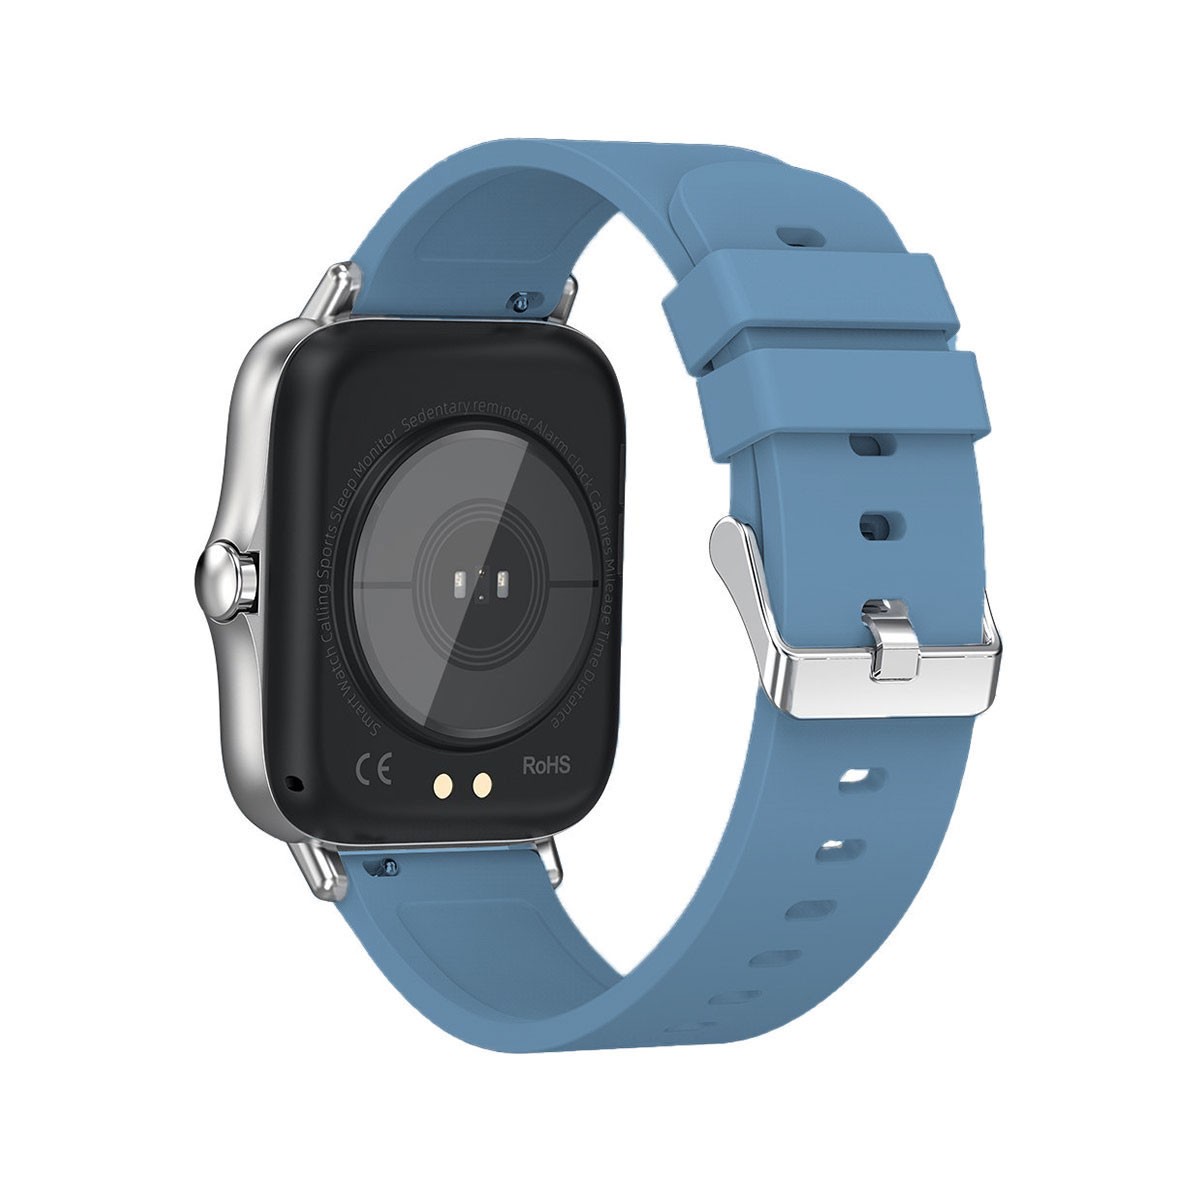 smartwatch-maxcom-fw55-aurum-pro-prateado